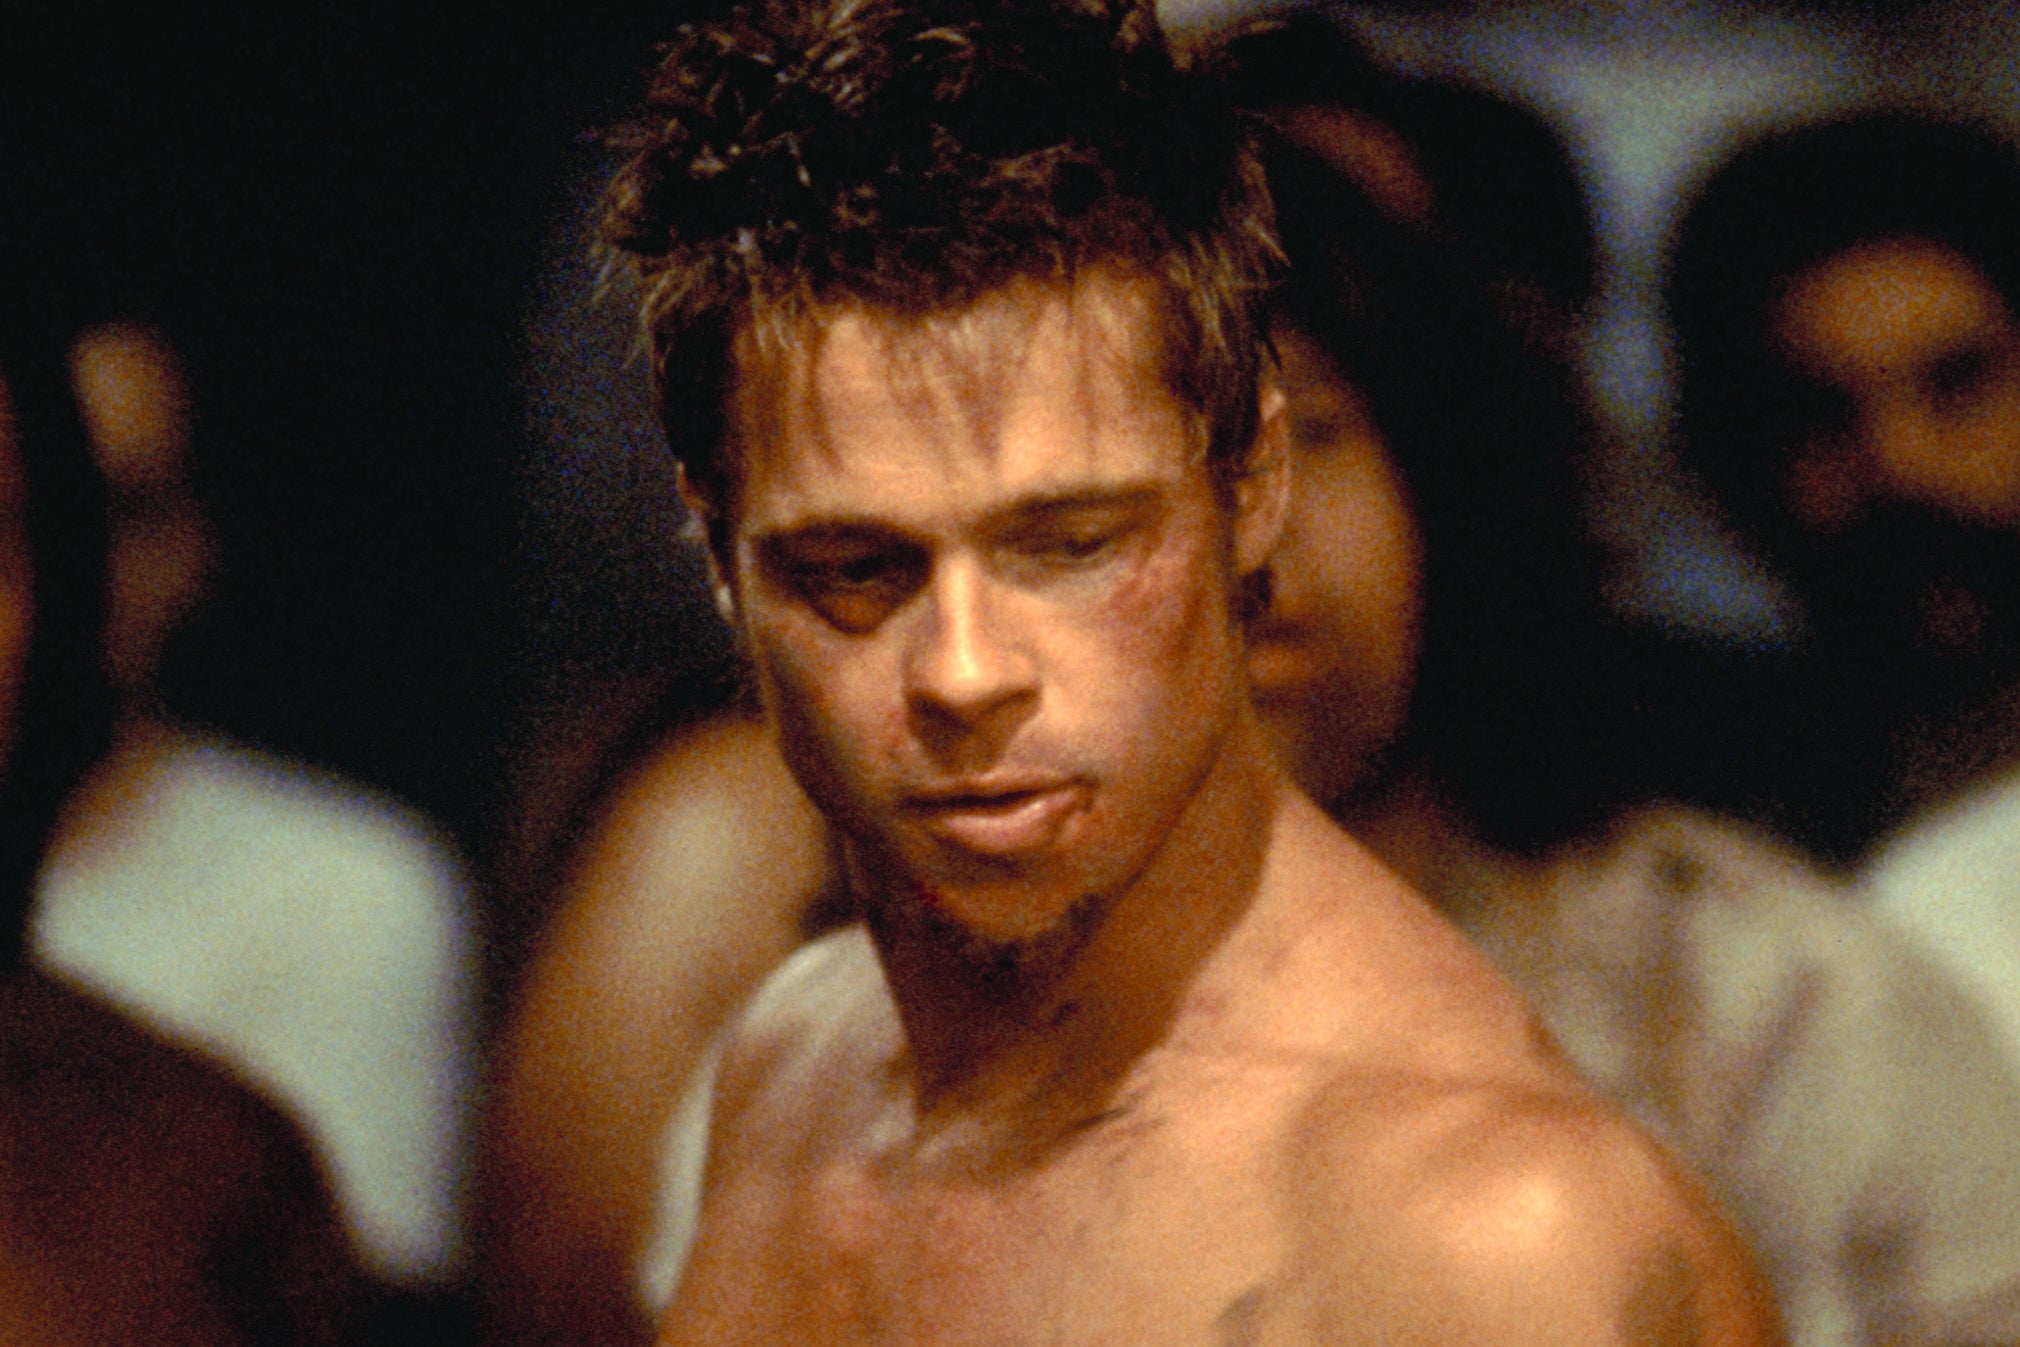 No shirt, all hurt: Brad Pitt in ‘Fight Club’